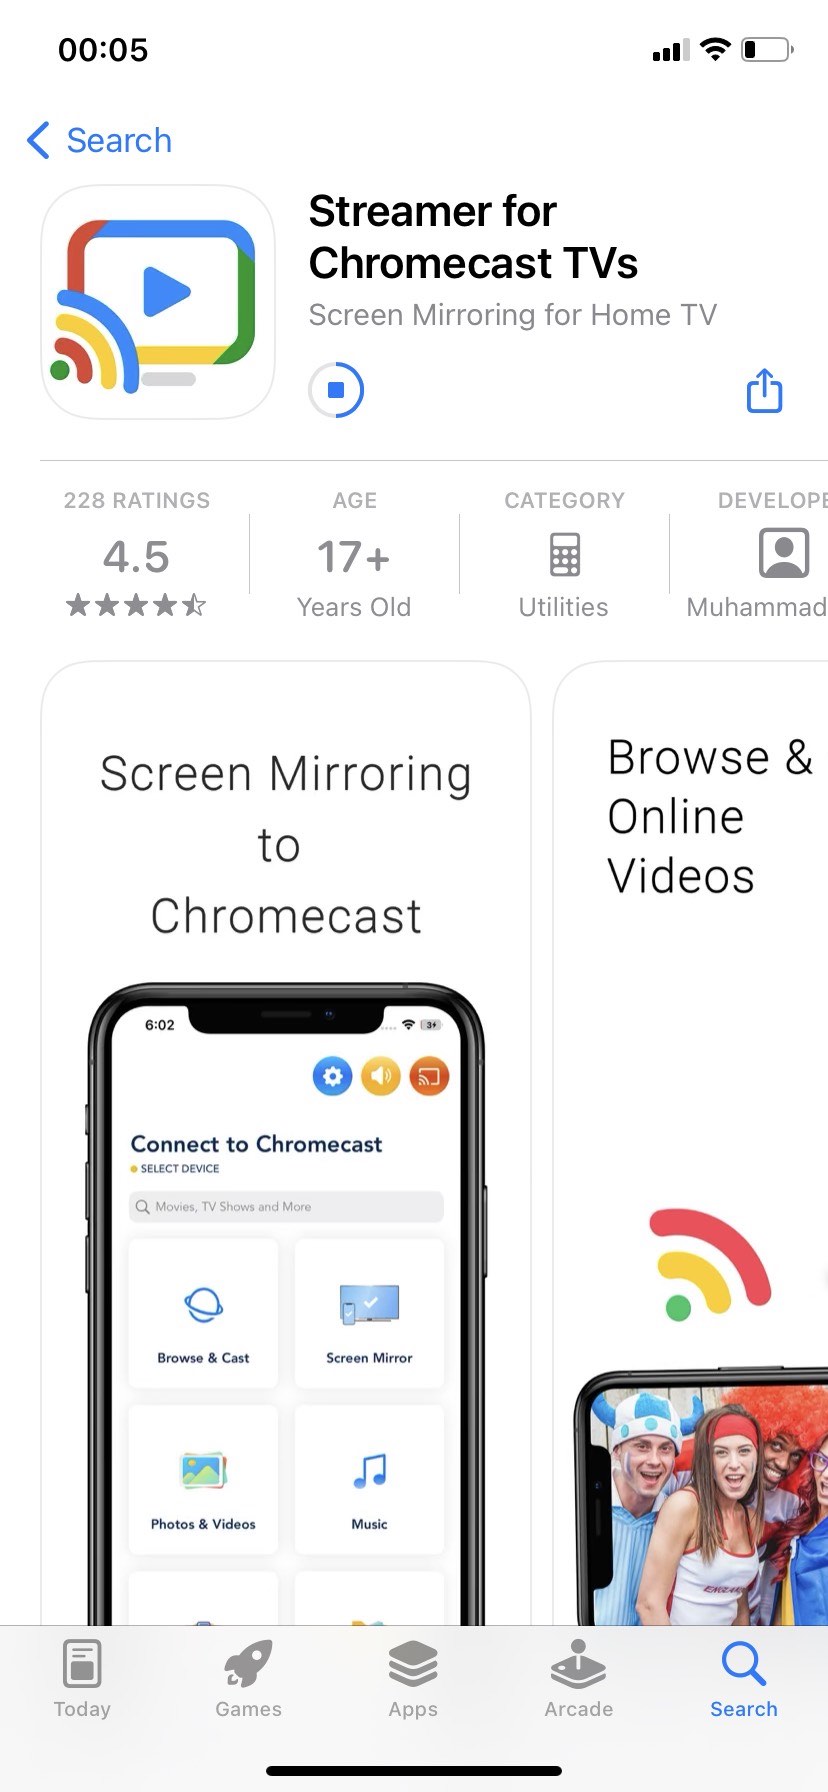 Download Streamer for Chromecast TVs app from the App Store